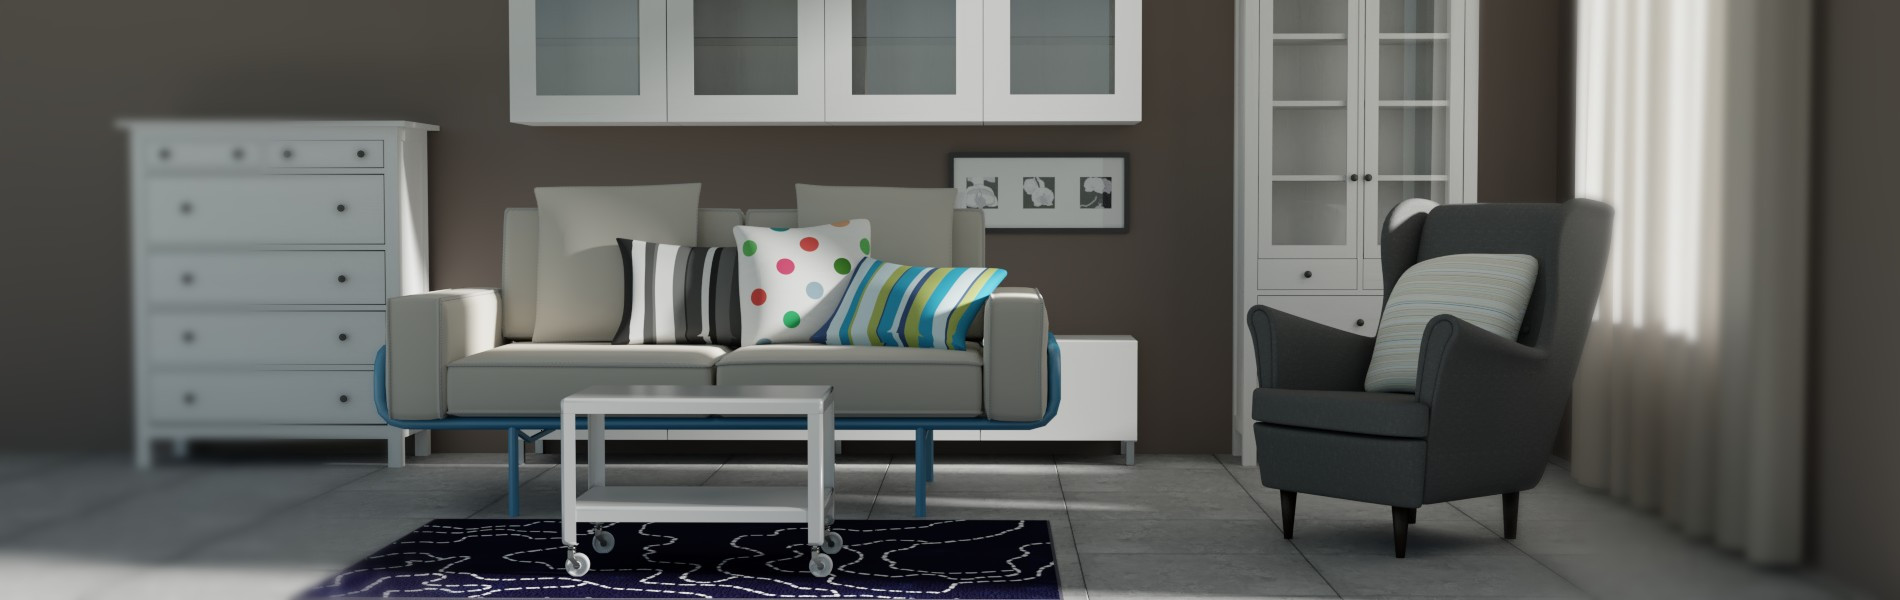 sweet home 3d furniture models